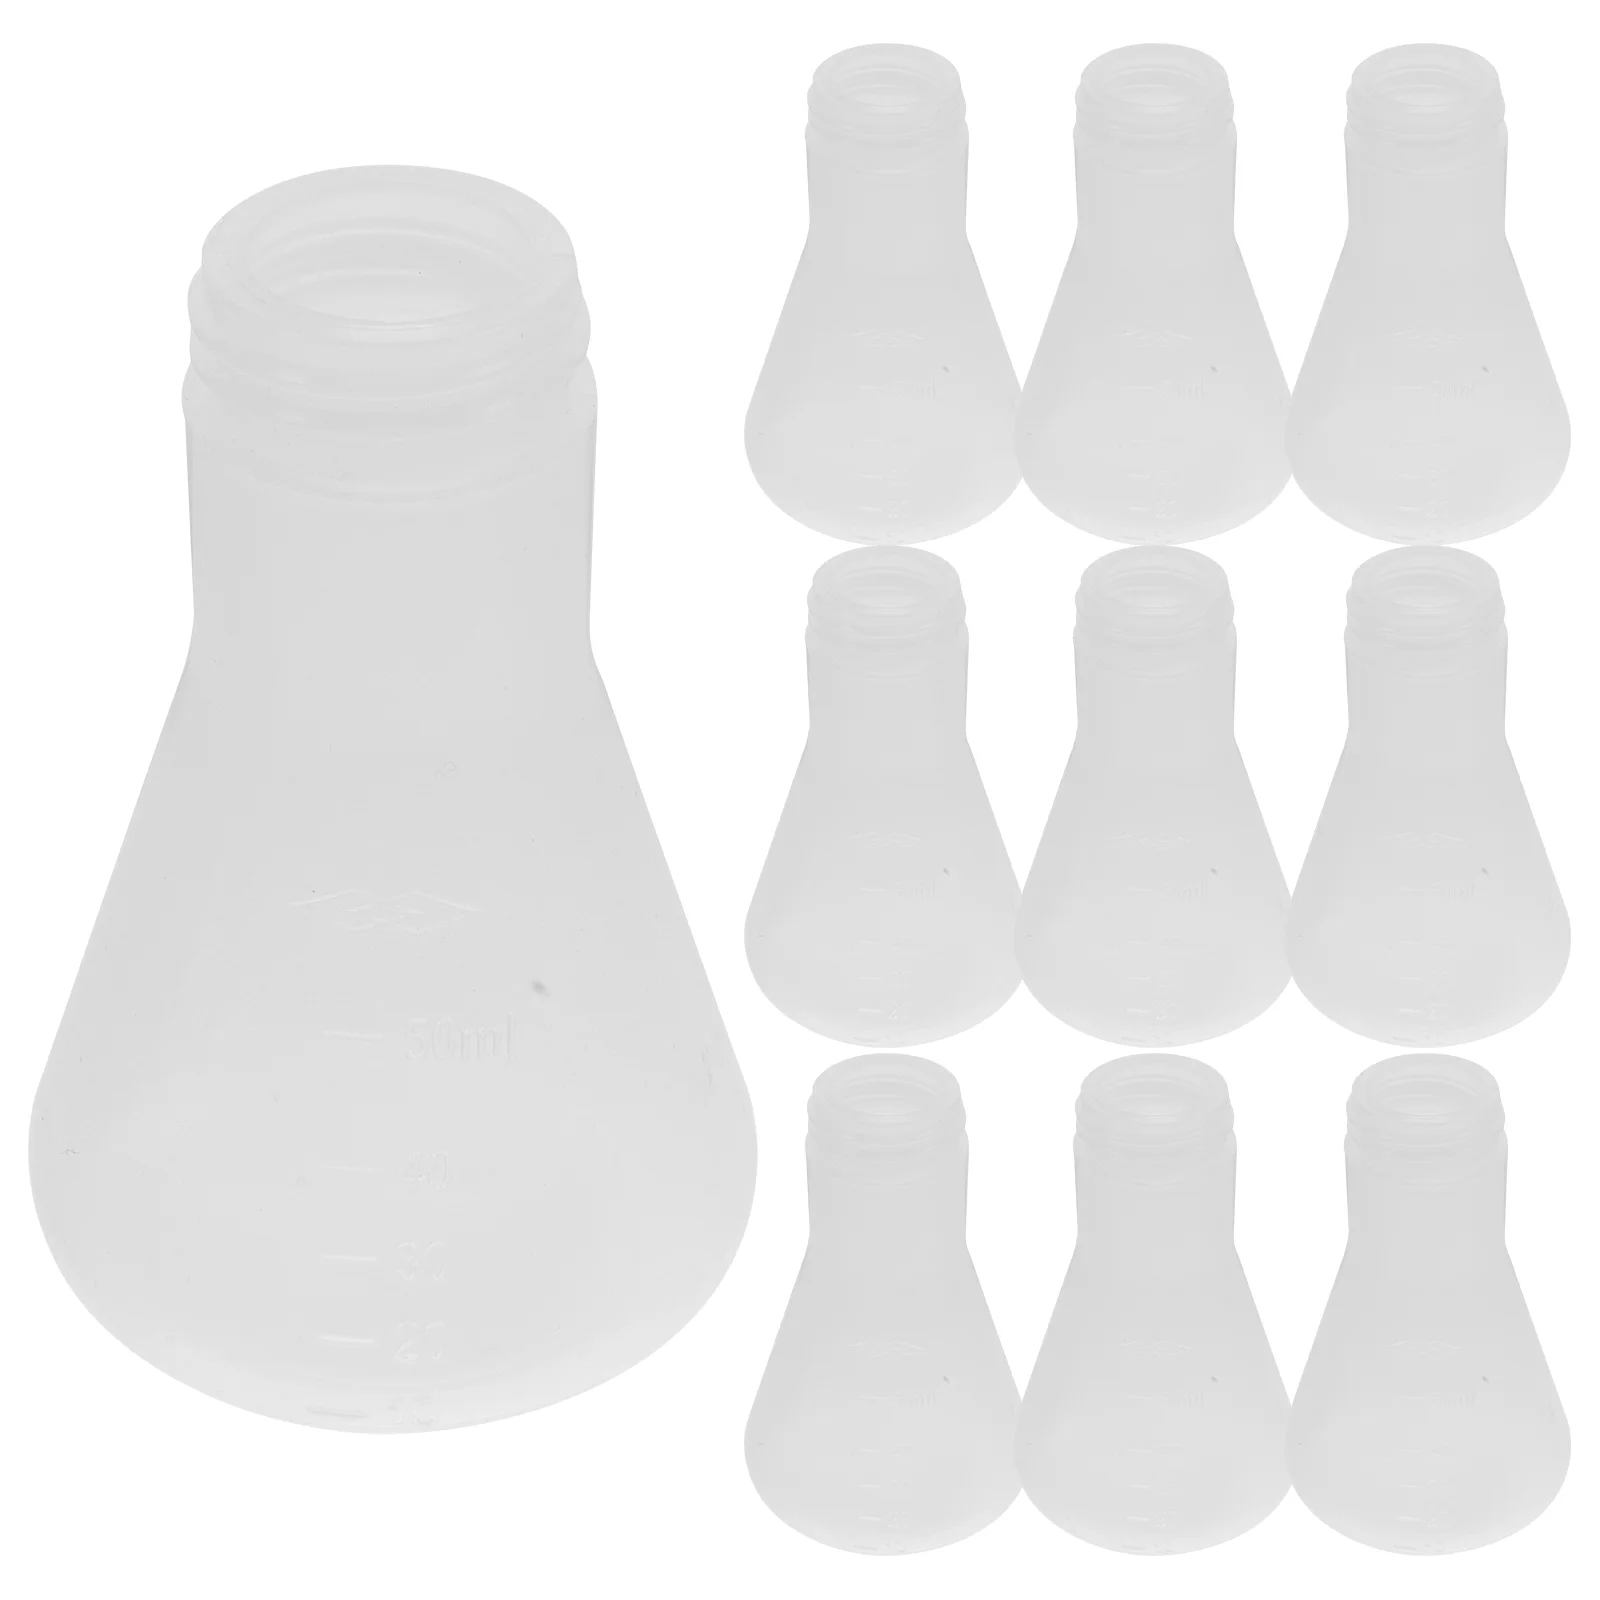 

10 Pcs Plastic Erlenmeyer Flask Science Conical Flasks Beaker Glass PP Laboratory Chemistry 50ml Lid